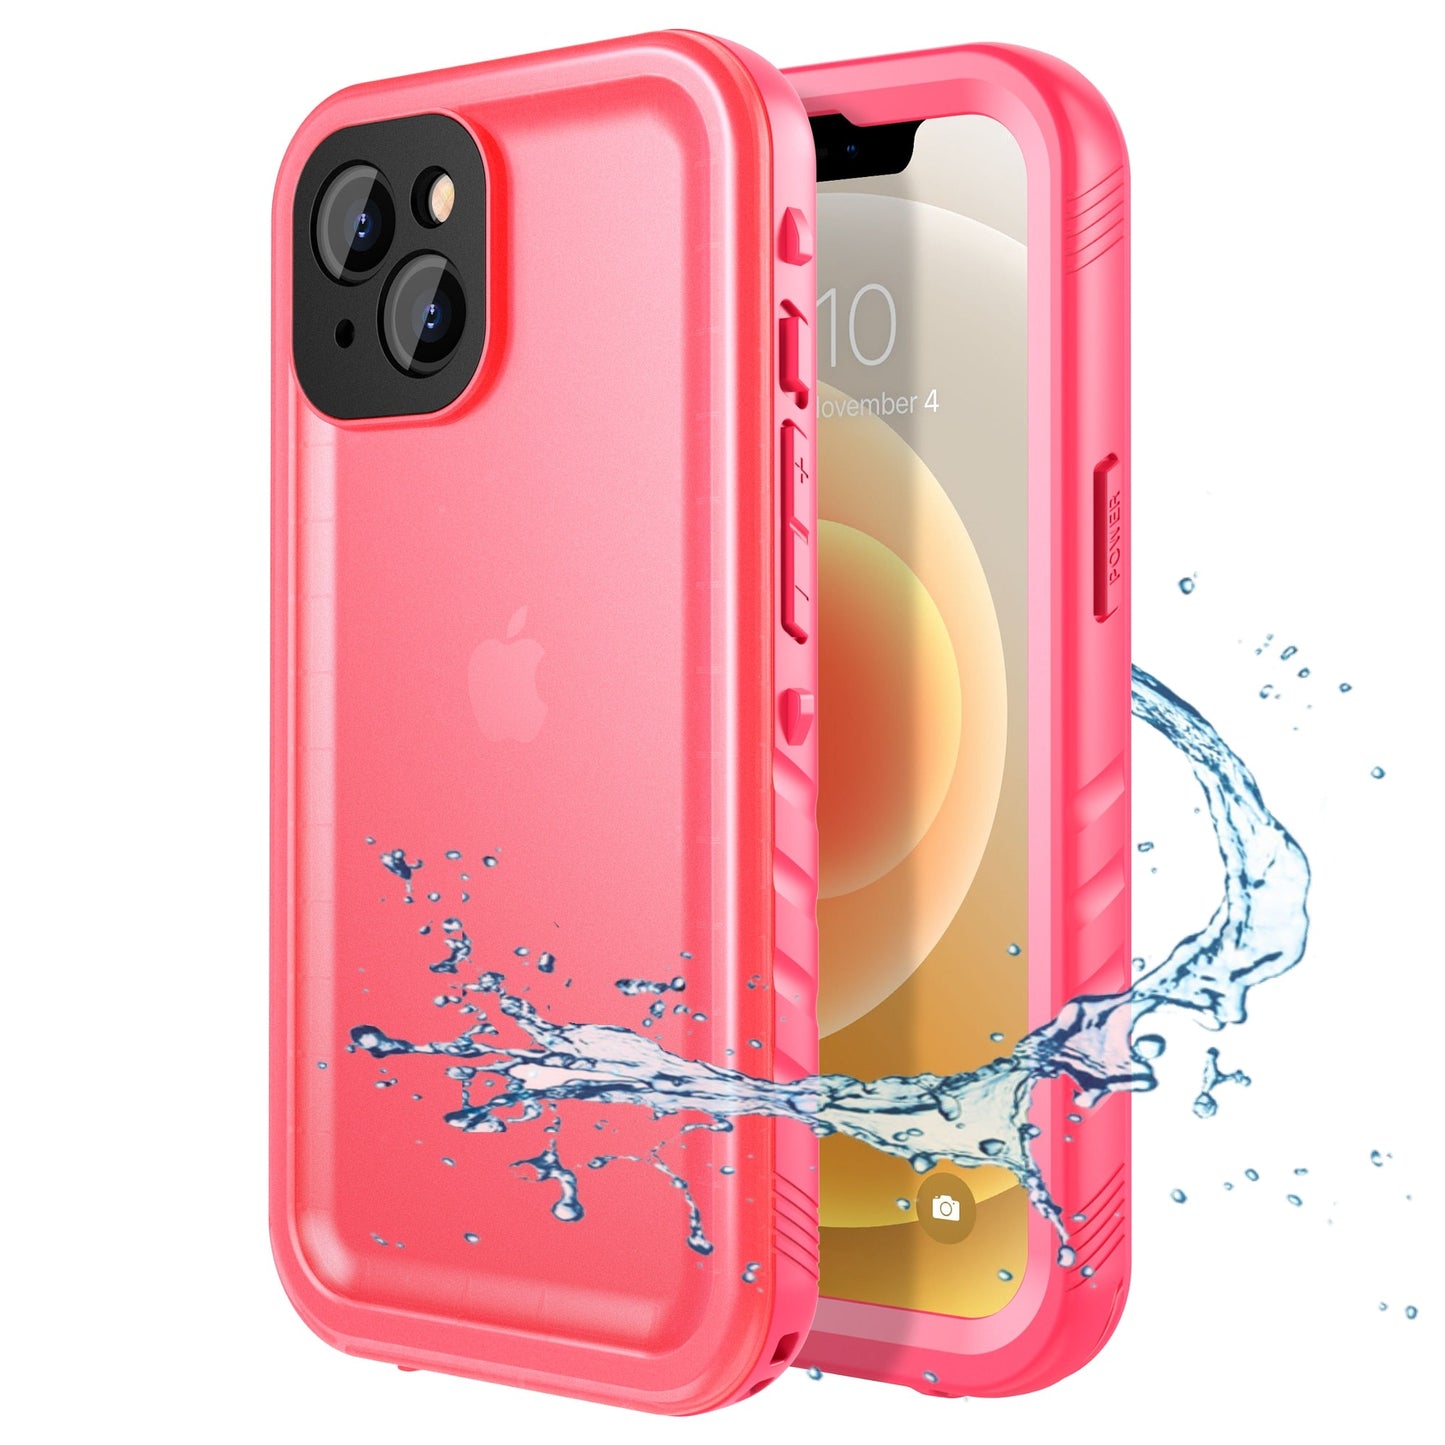 Waterproof Case For iPhone